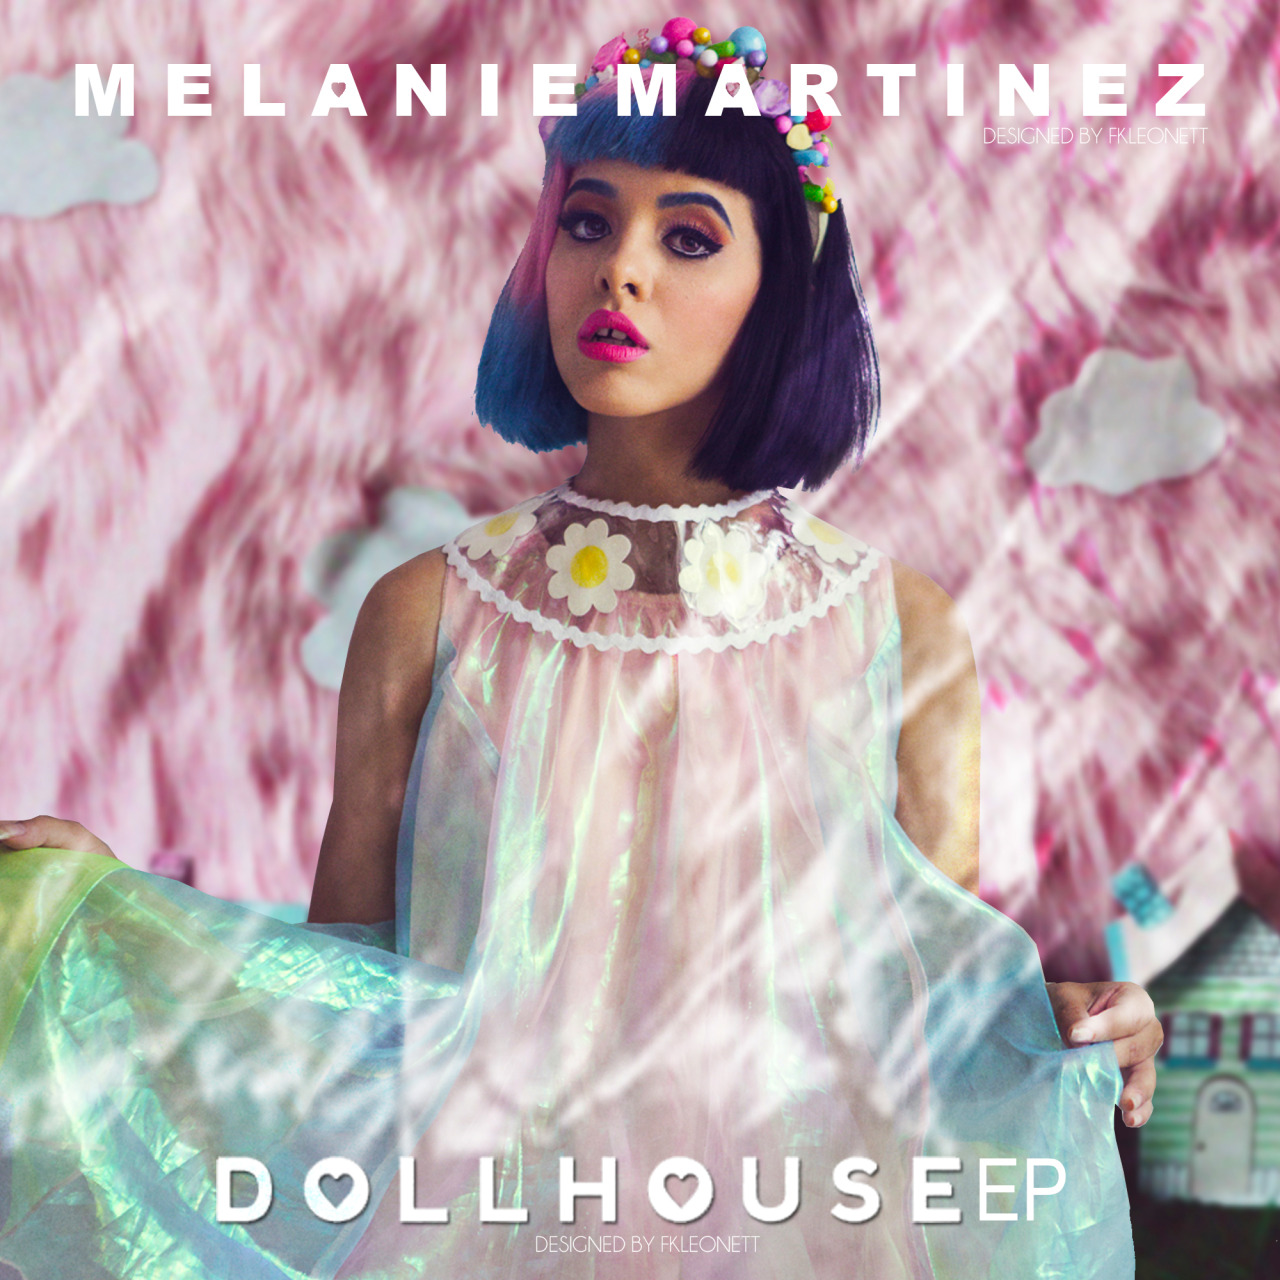 Dollhouse - EP - Album by Melanie Martinez - Apple Music